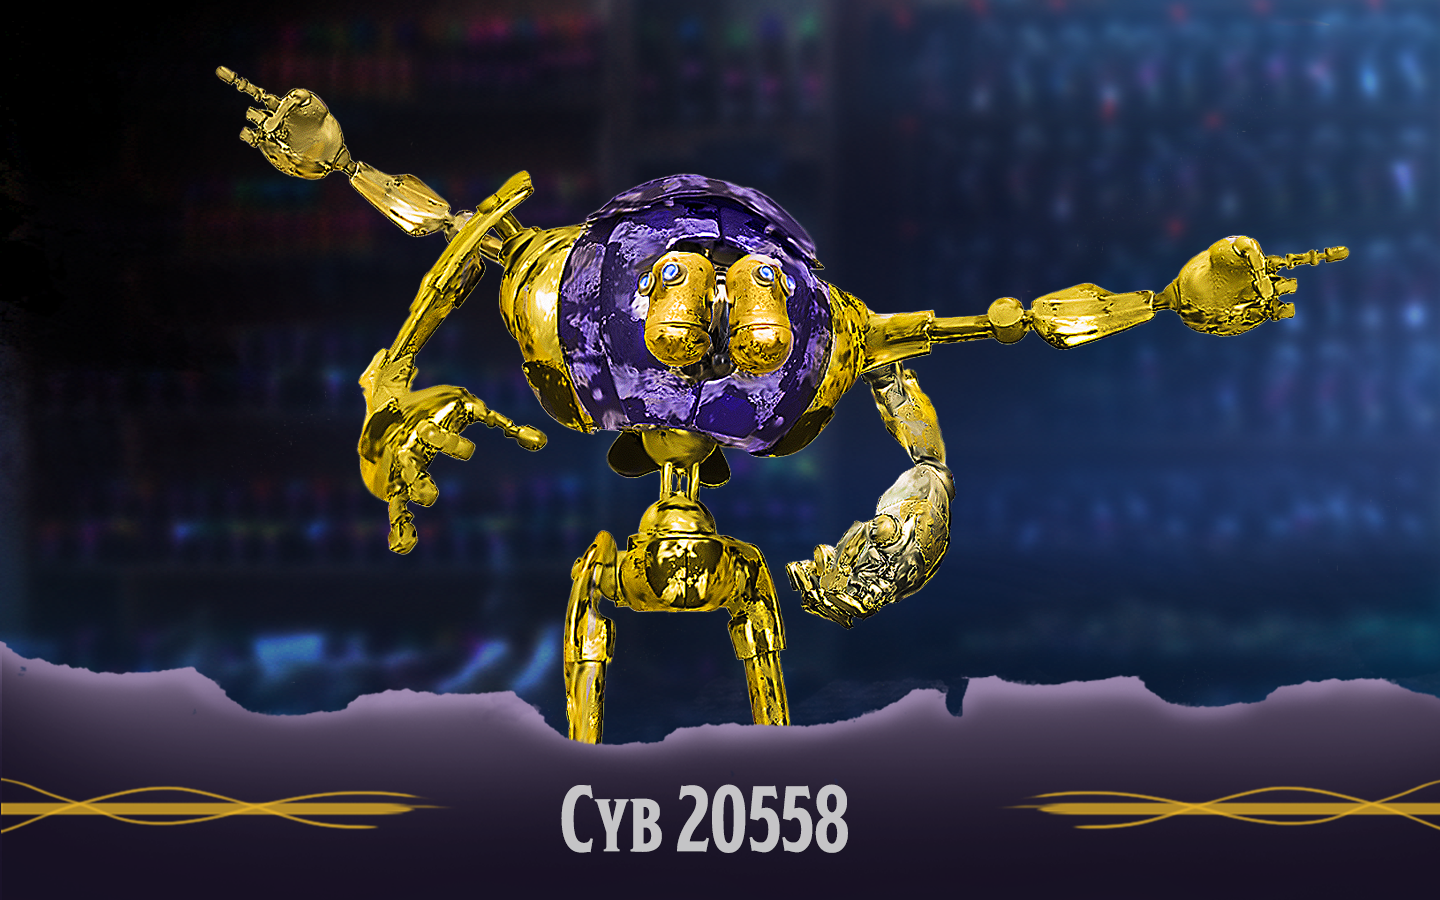 Cyb 20558 – Automaton NPC with a golden heart